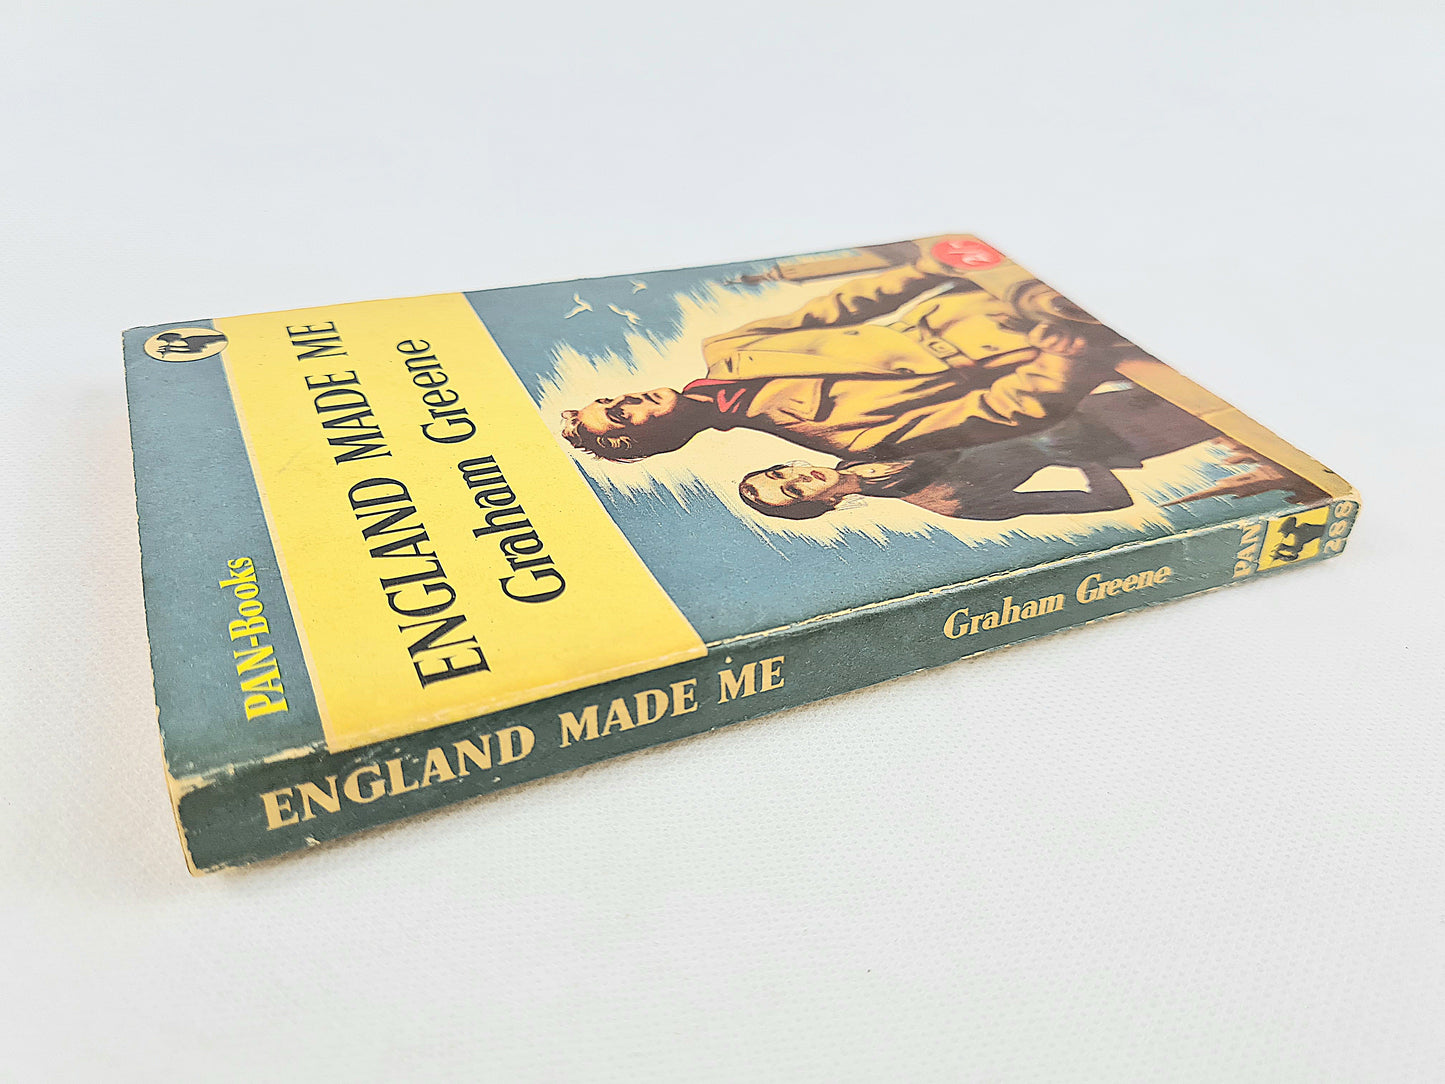 England Made Me by Graham Greene. Vintage Pan Books 288